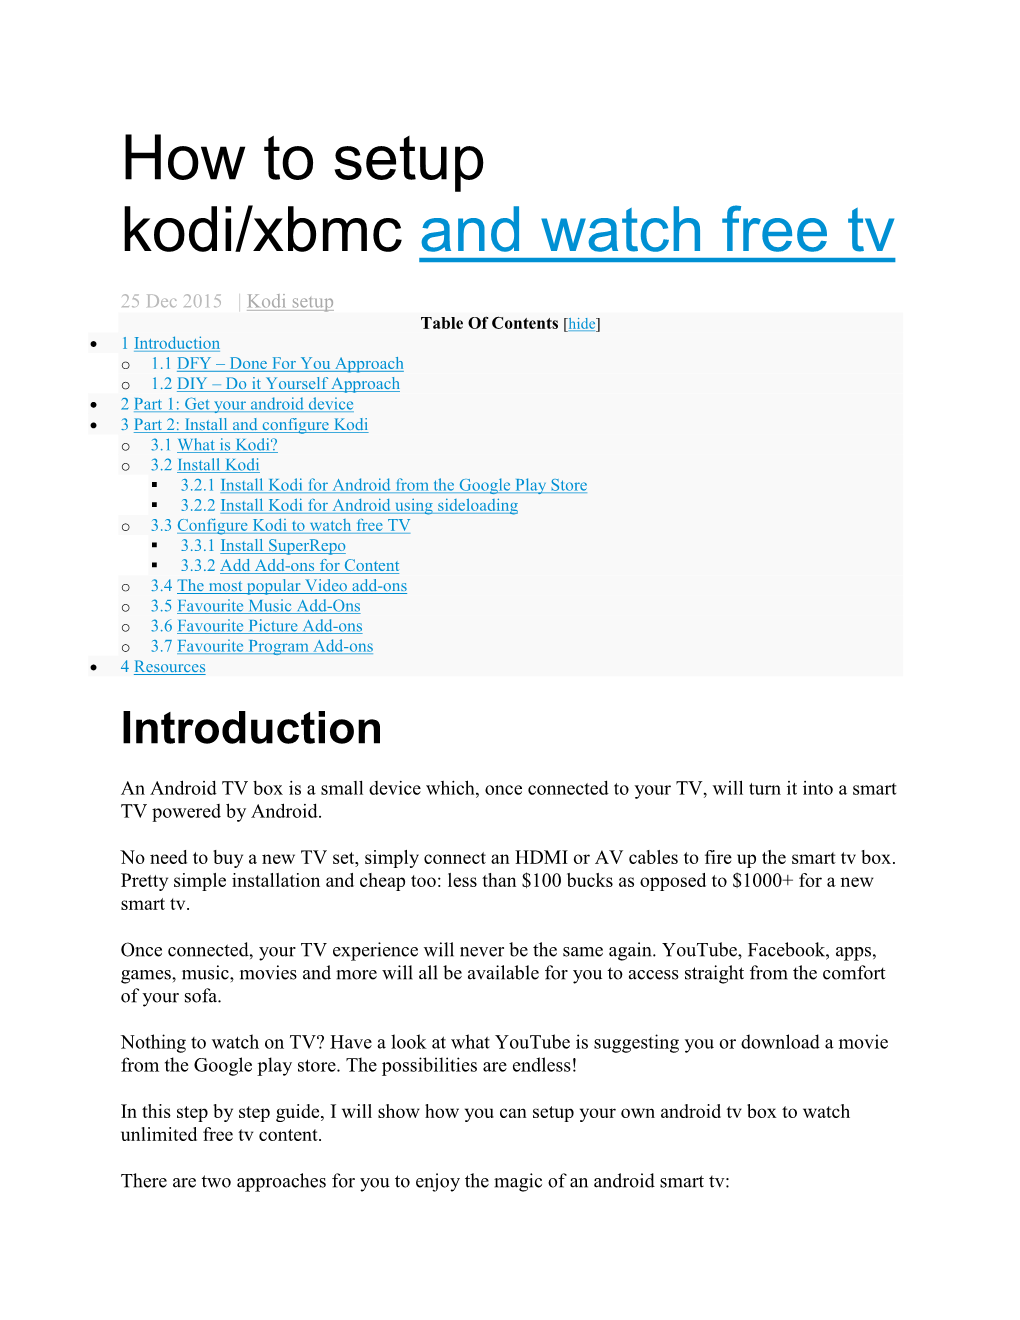 How to Setup Kodi/Xbmc and Watch Free Tv